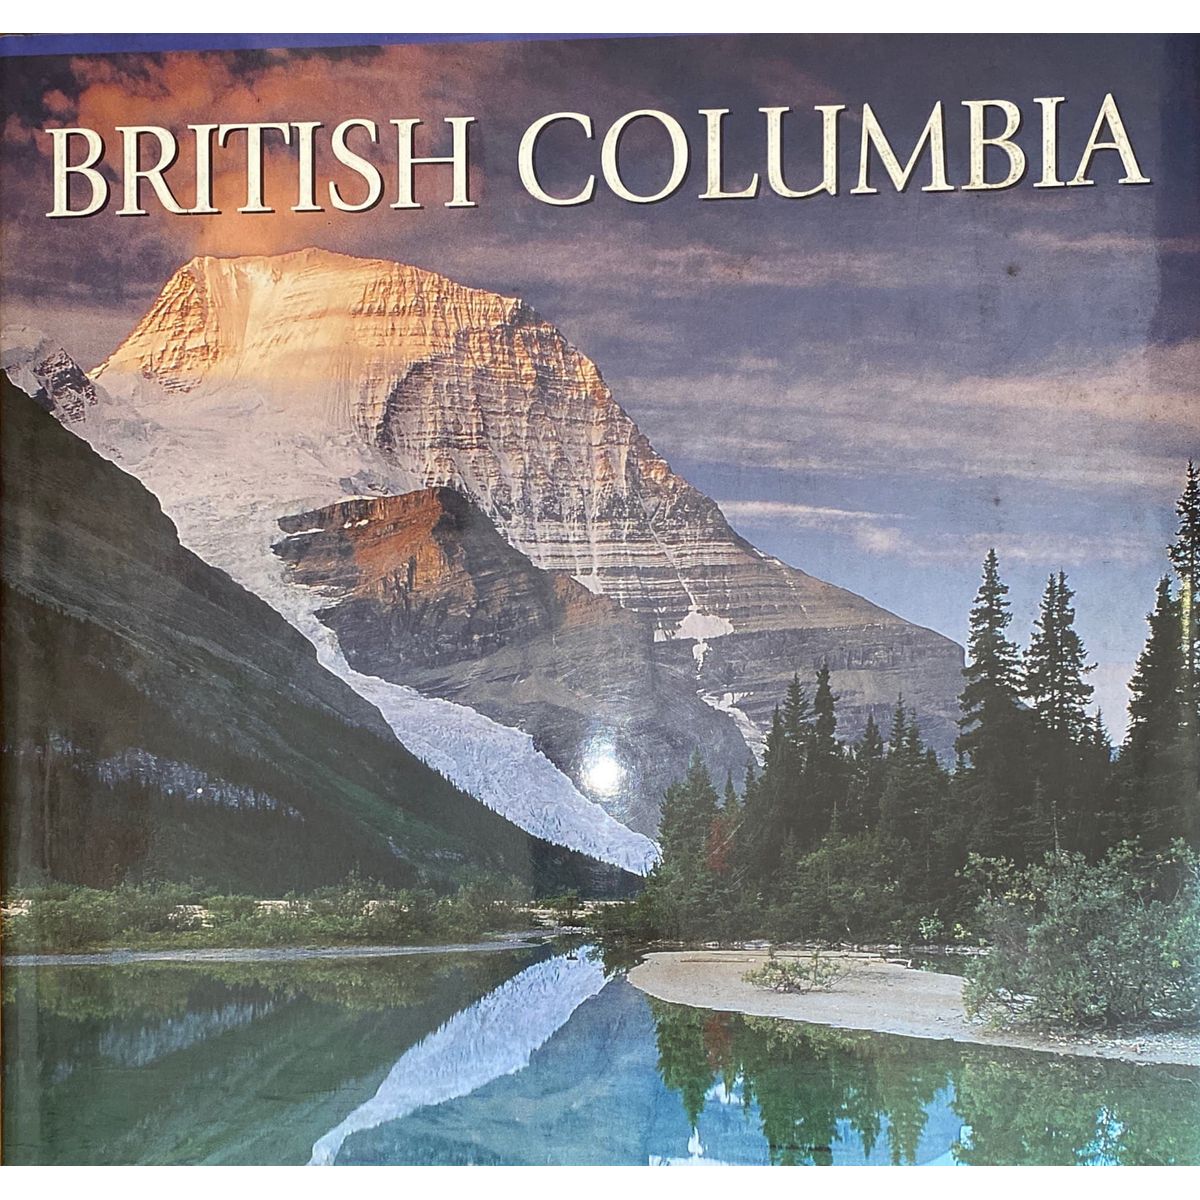 ISBN: 9781551105215 / 1551105217 - British Columbia by Tanya Lloyd Kyi, Canada Series [2004]